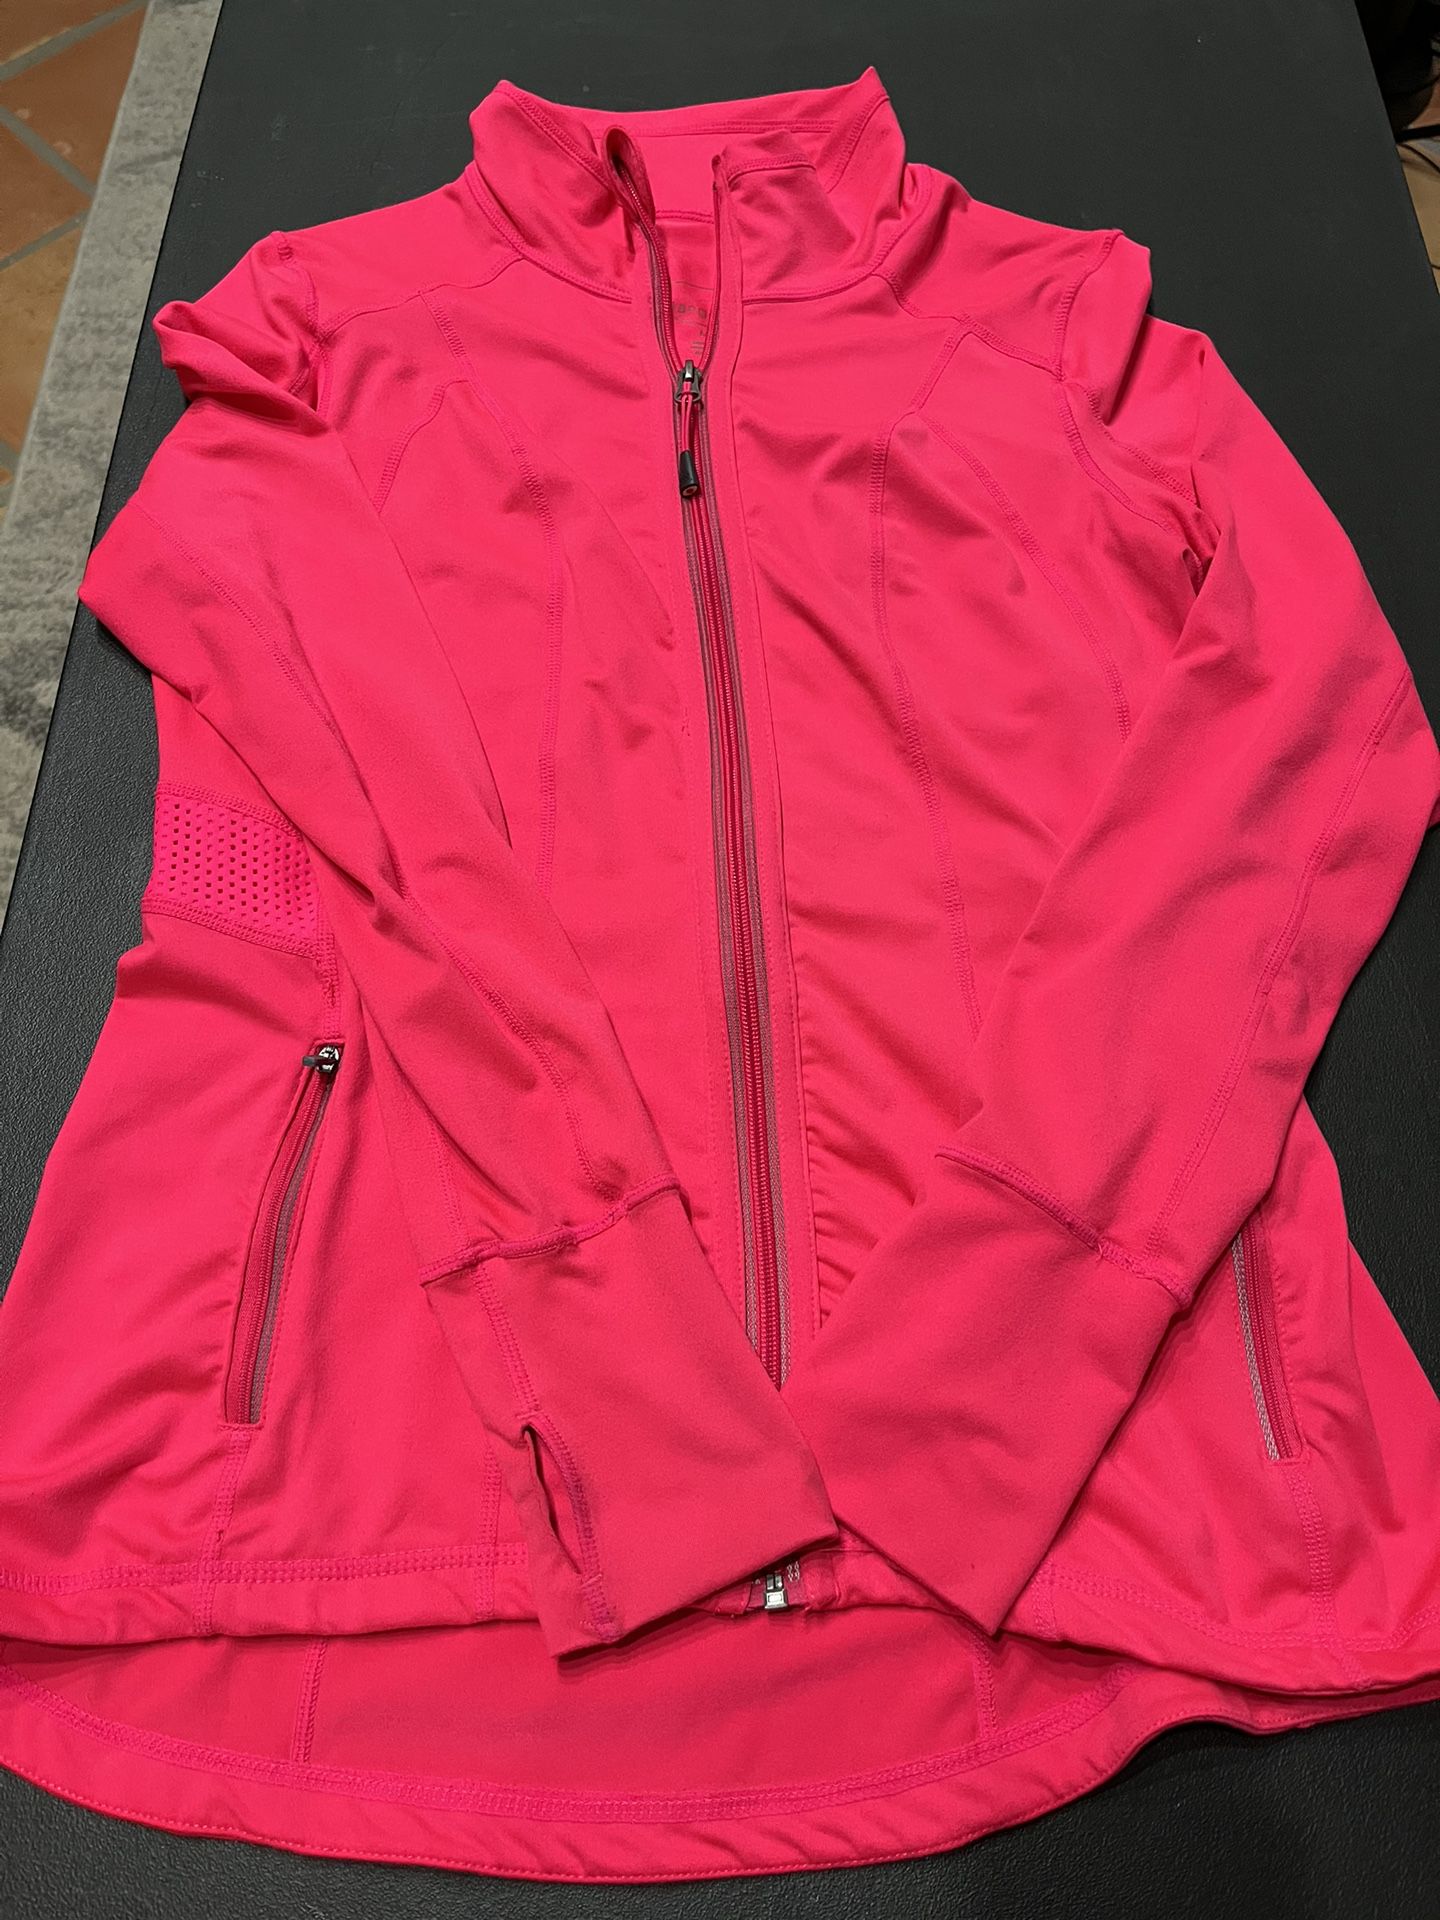 Women’s Pink Athletic Jacket